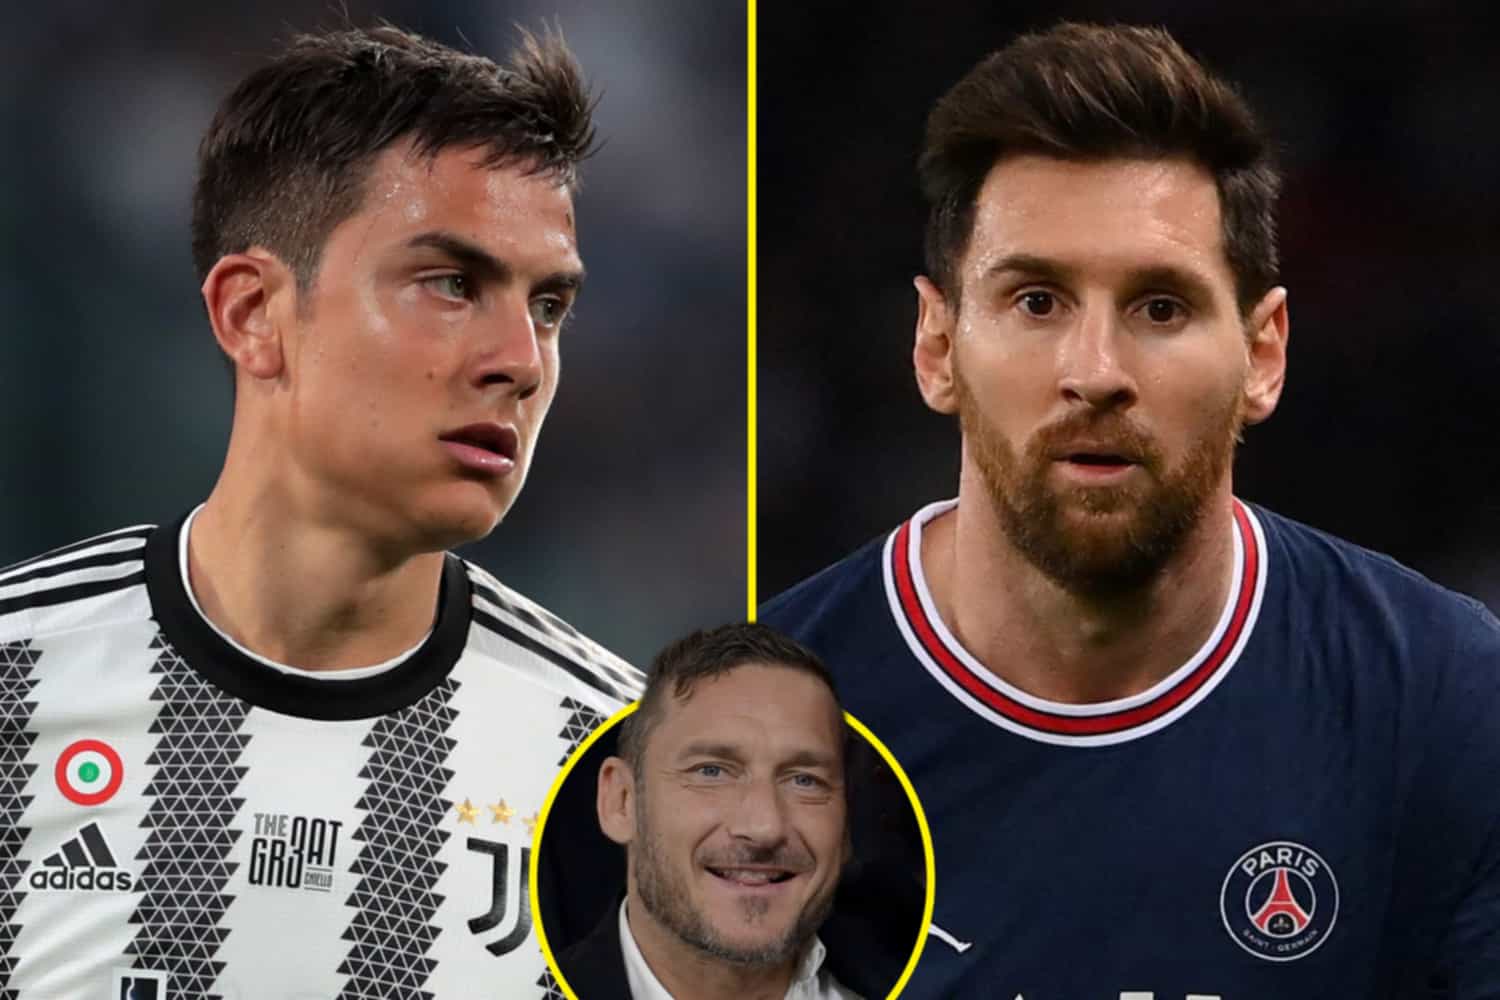 Tottenham target Paulo Dybala told to ‘stop imitating Lionel Messi’ as Francesco Totti vows to tempt forward to Jose Mourinho’s Roma next season